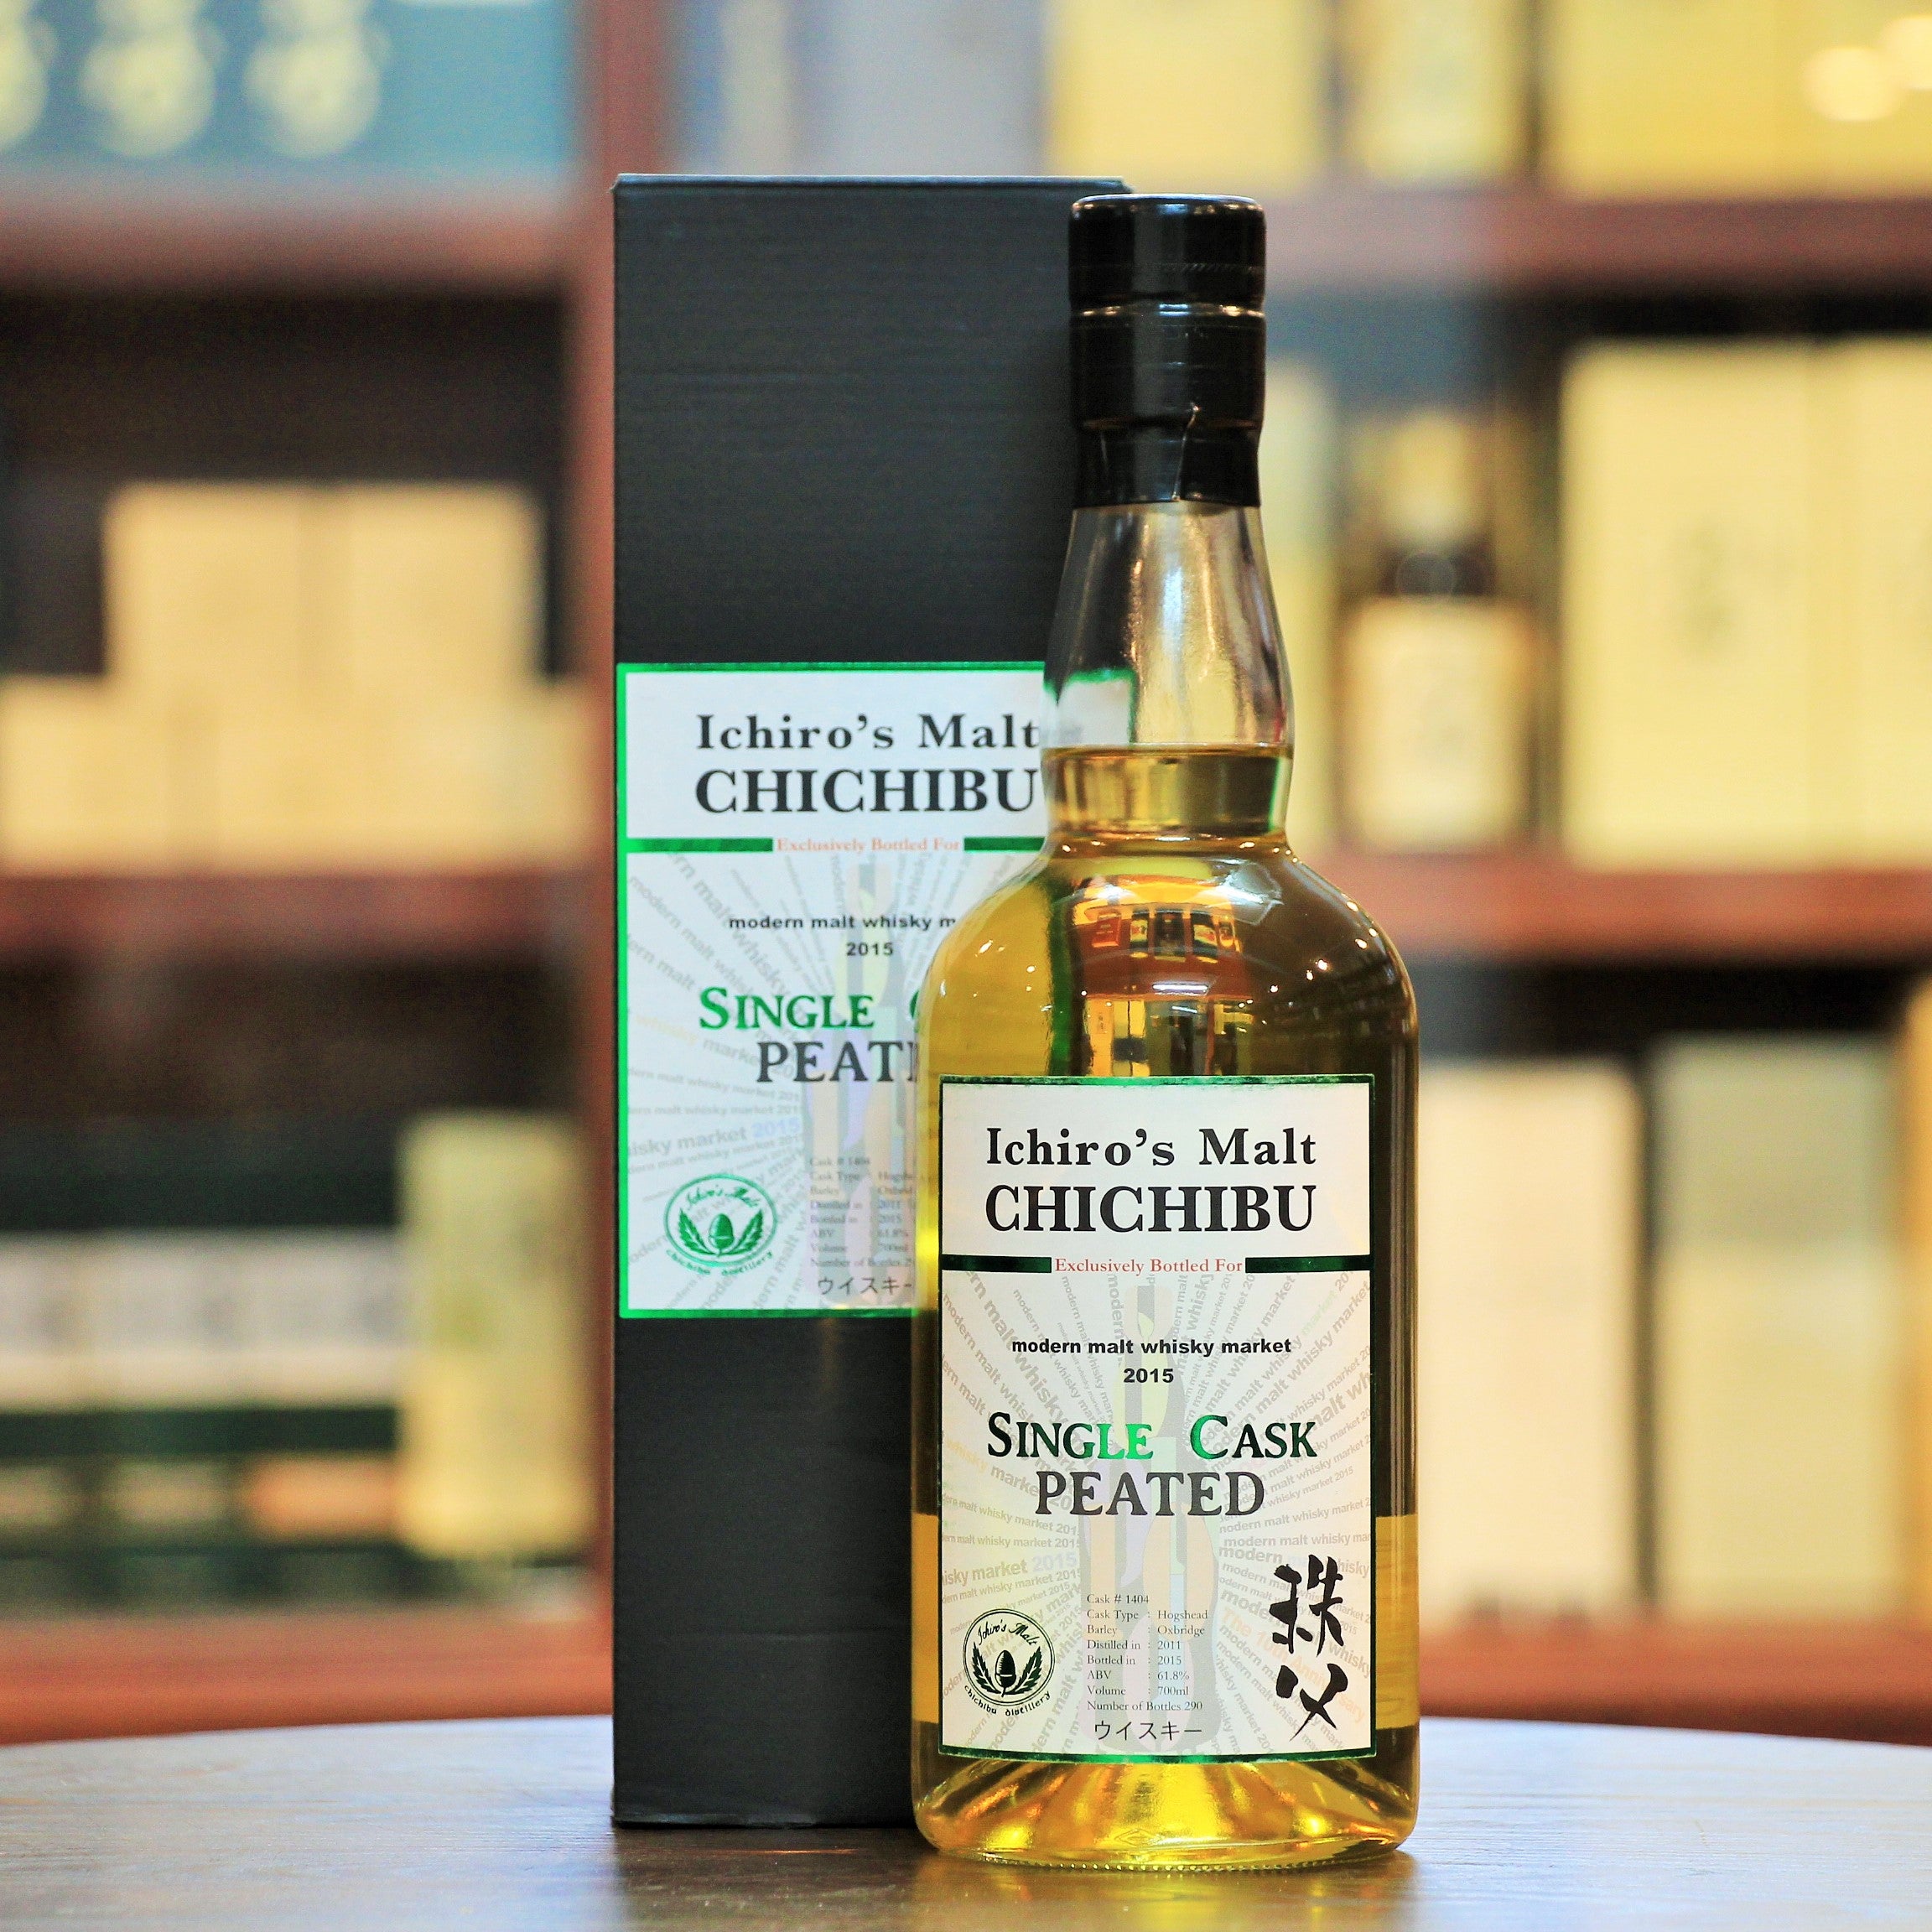 Ichiro's Malt Chichibu 現代麥芽威士忌市場 2015 泥煤日本單一麥芽威士忌